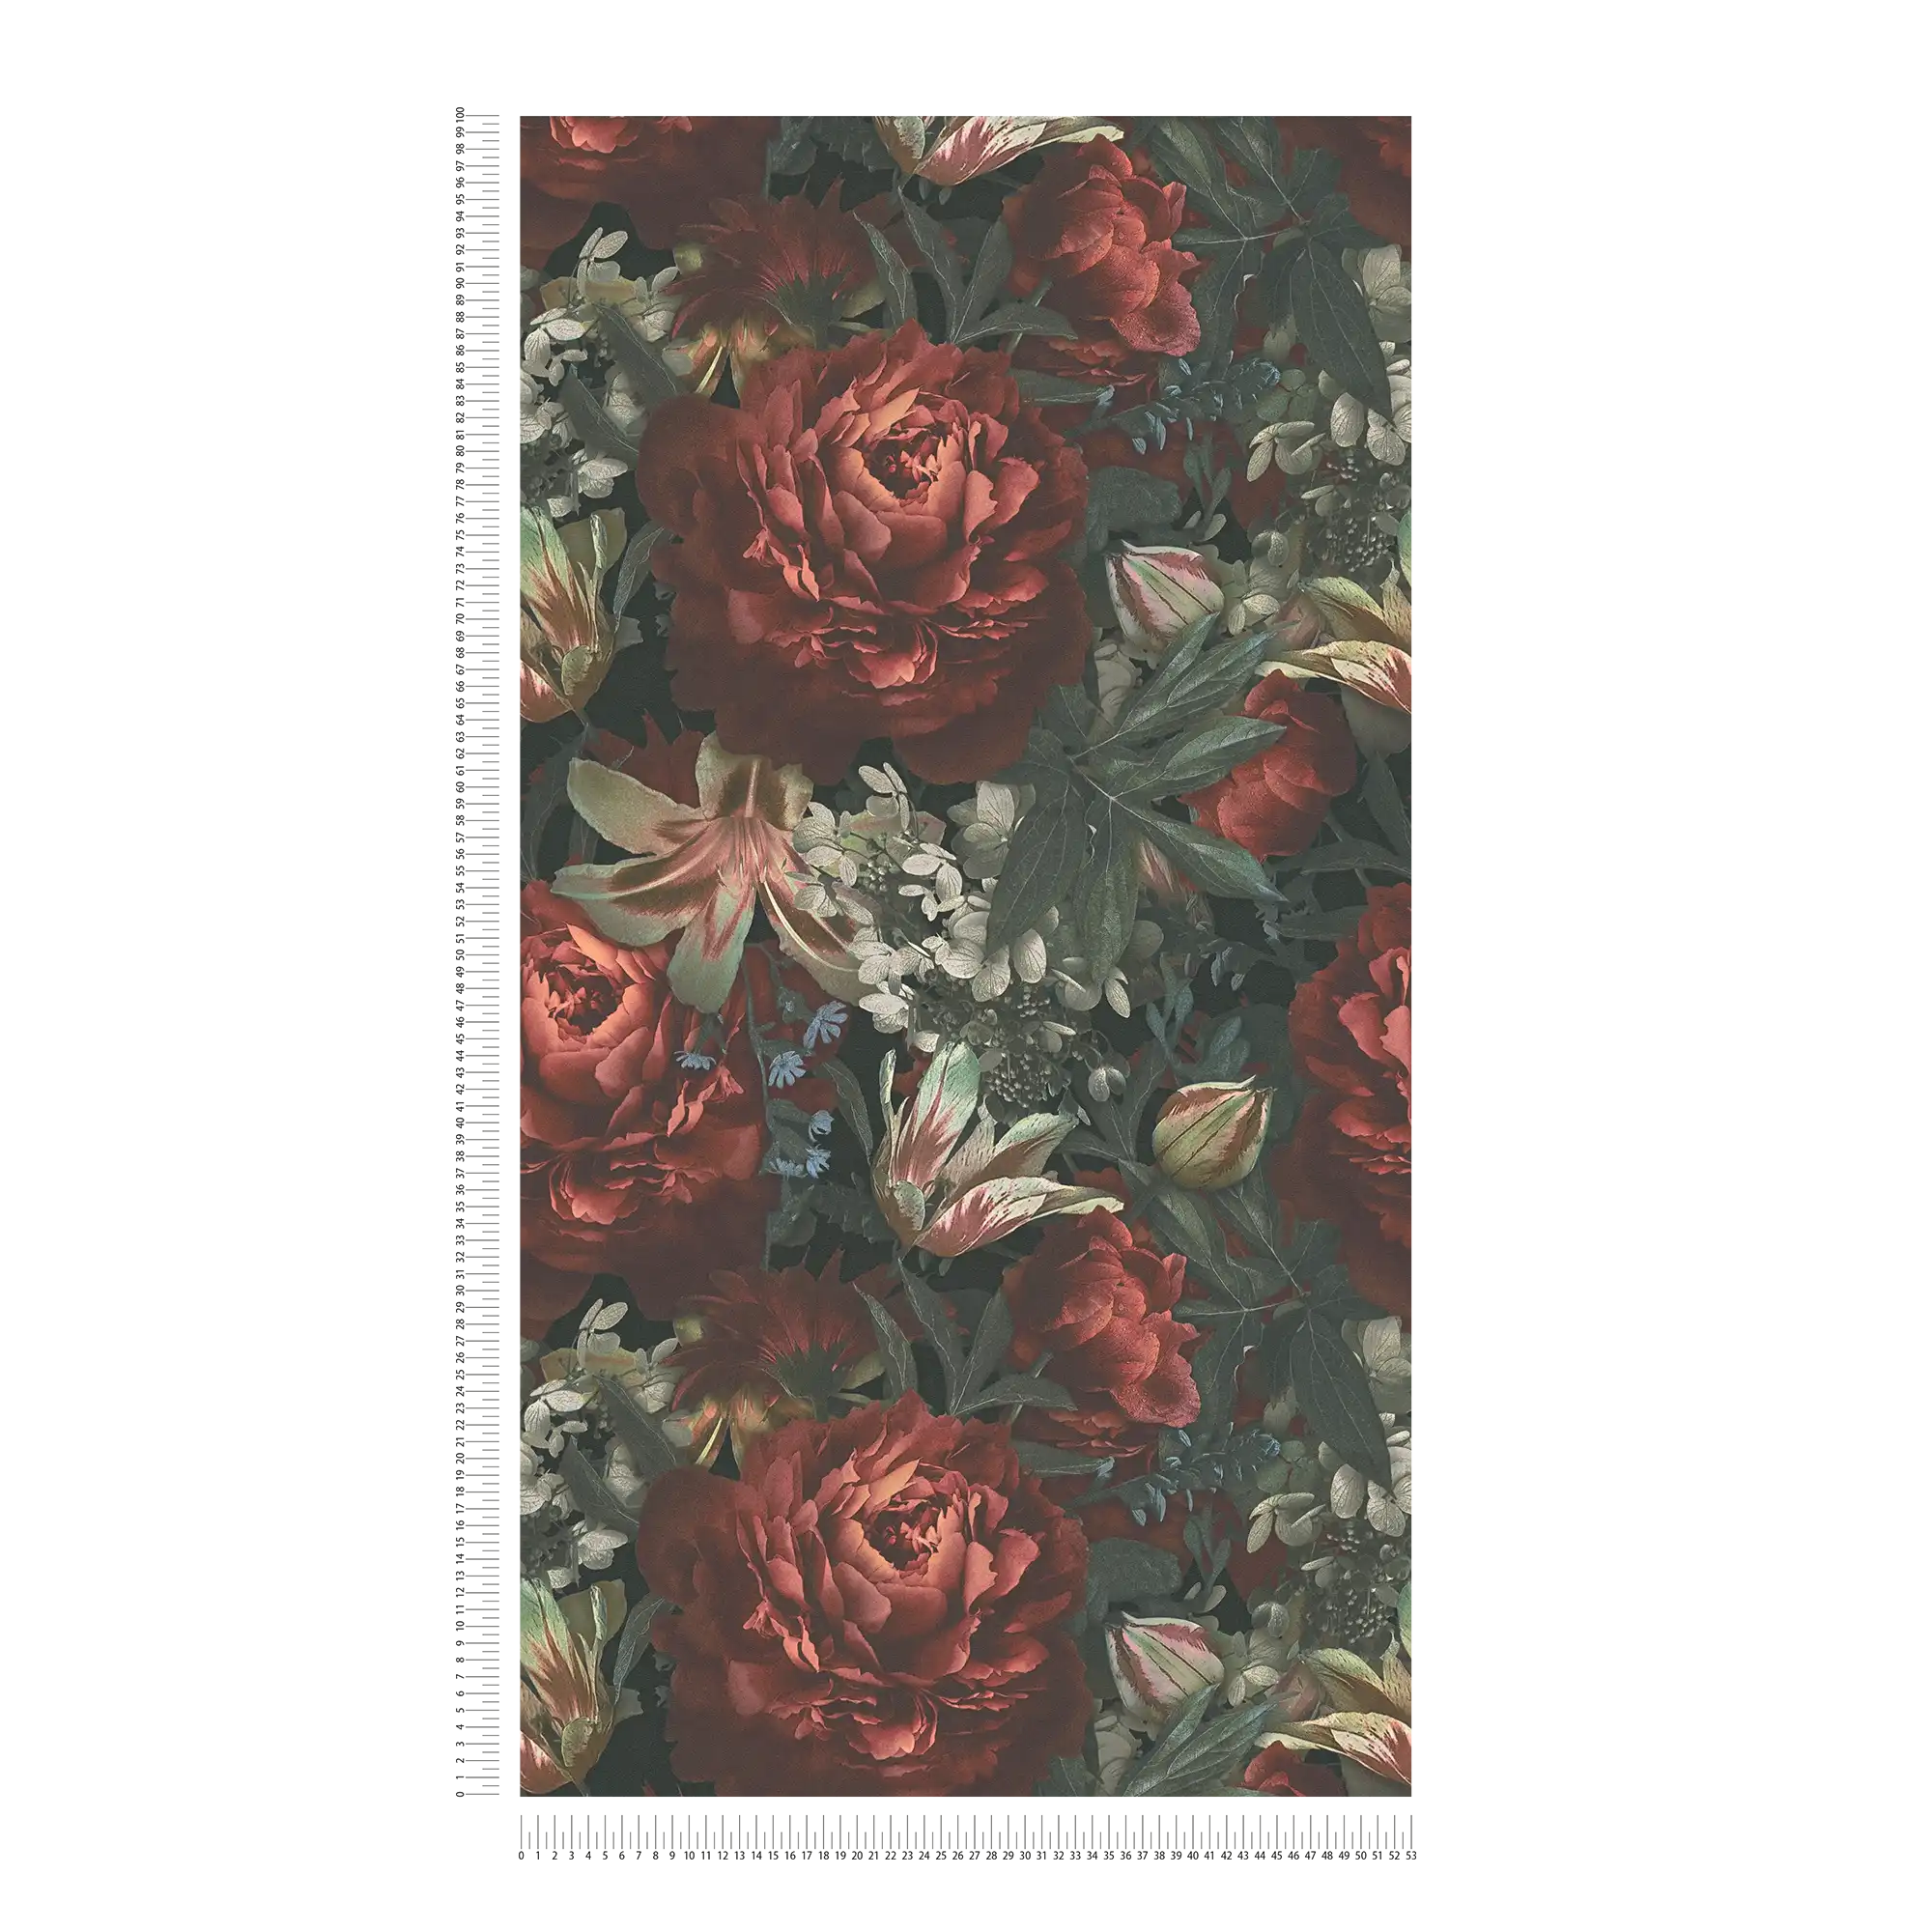             Carta da parati floreale rose e tulipani in stile vintage - verde, rosso, crema
        